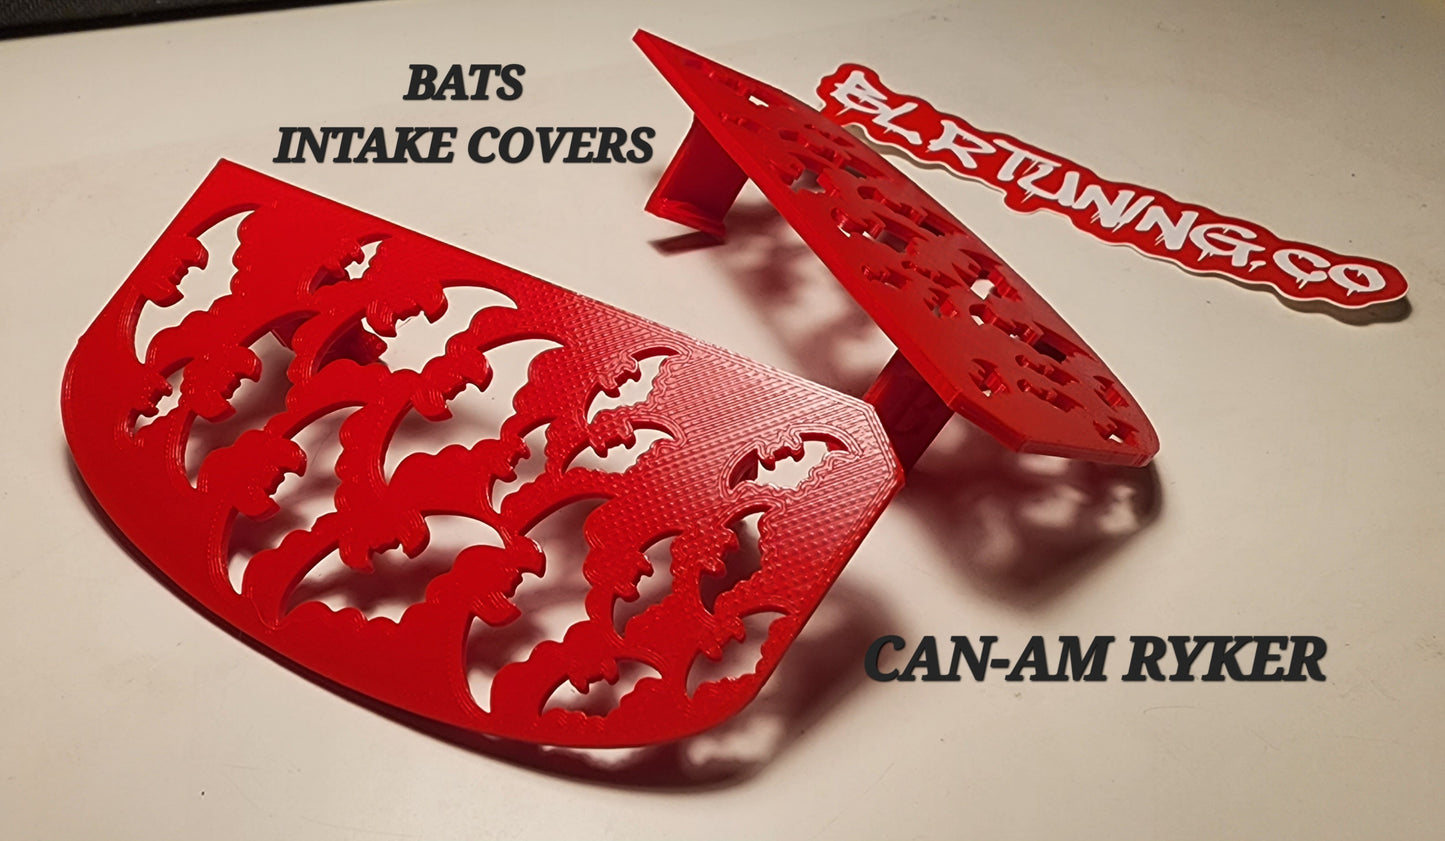 BATS CAN-AM RYKER INTAKE COVERS